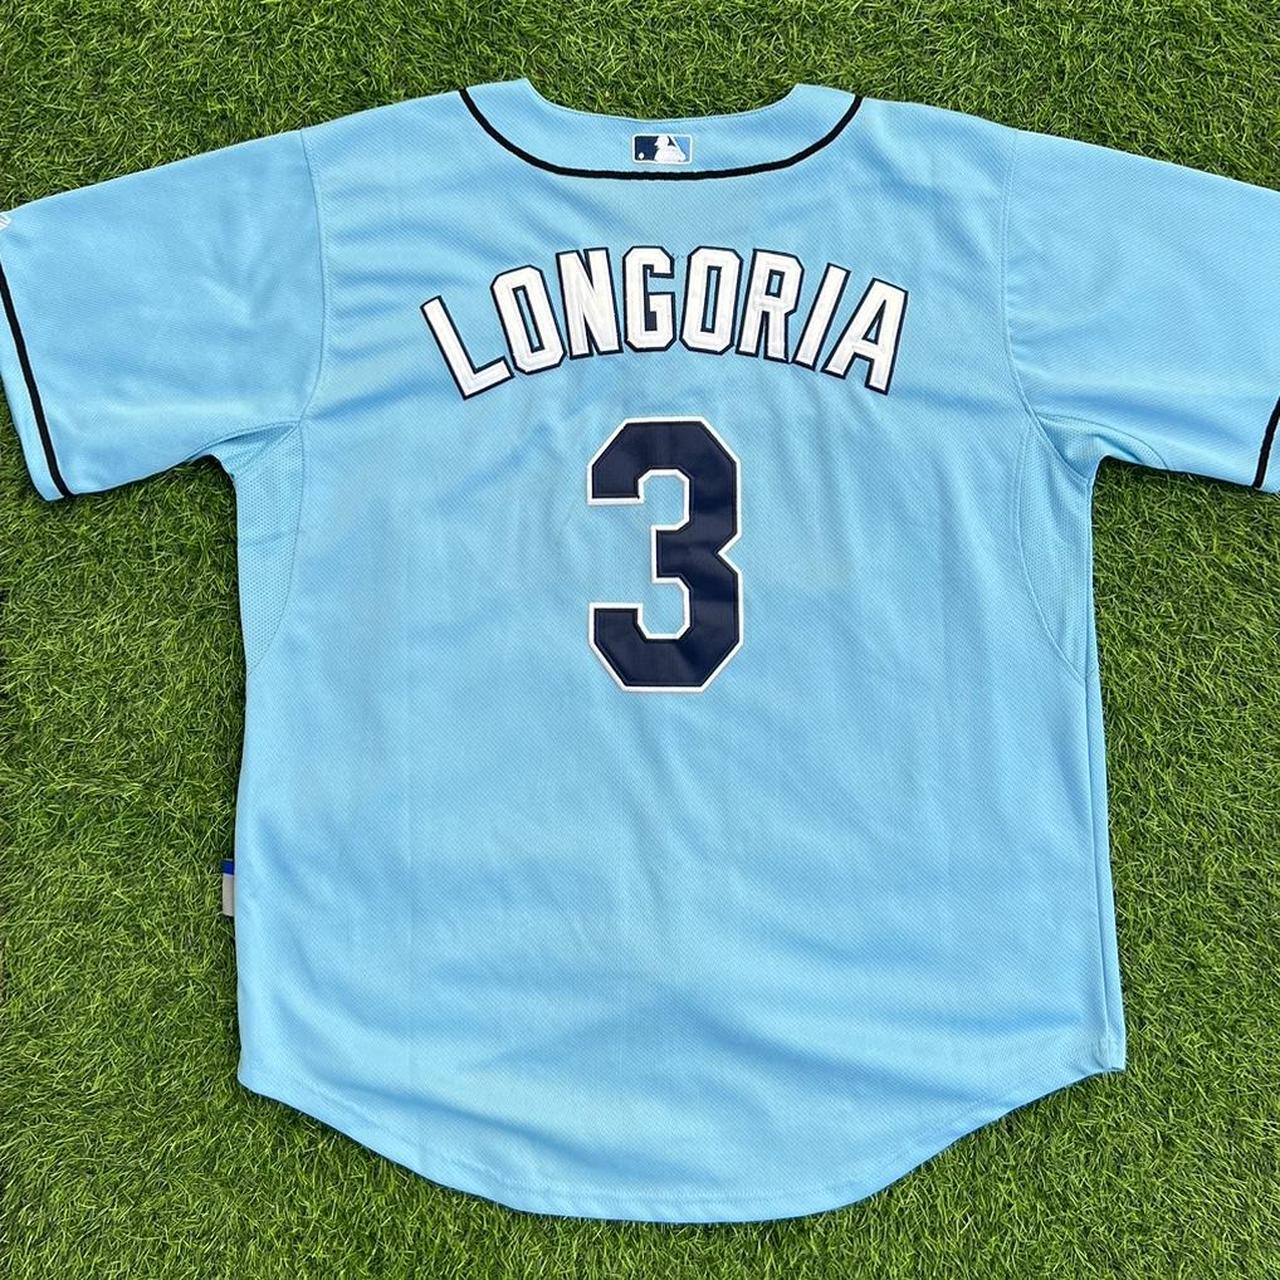 Evan Longoria Tampa Bay Rays MLB Jerseys for sale